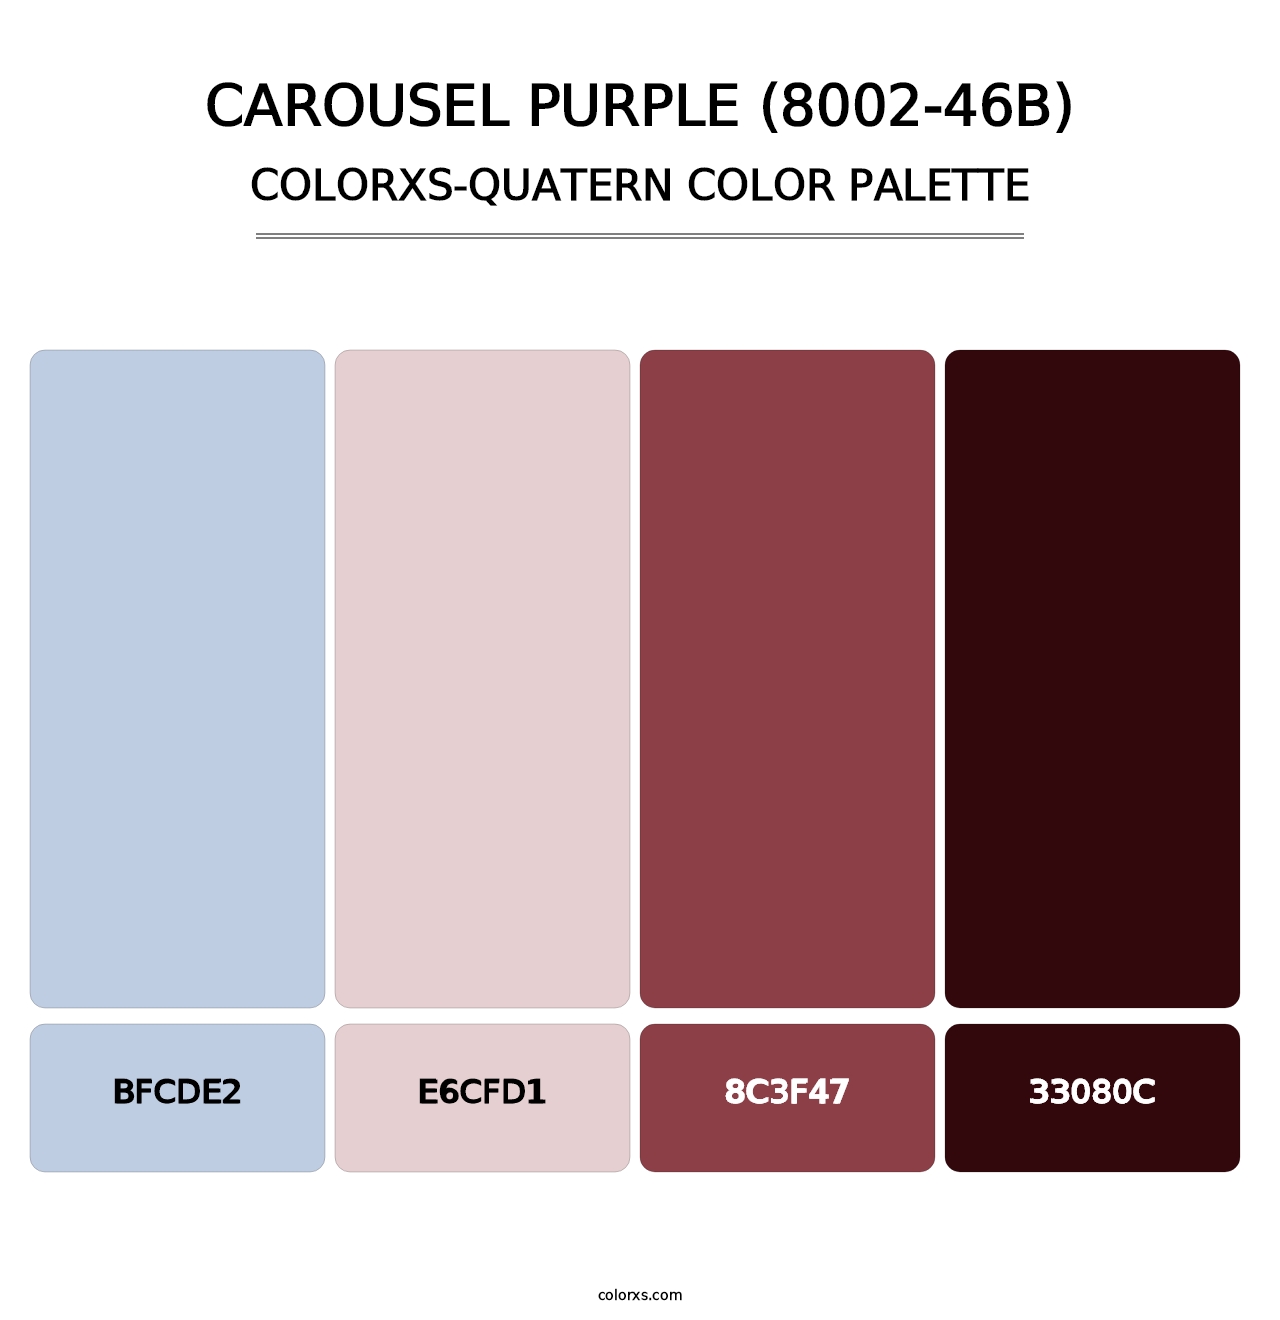 Carousel Purple (8002-46B) - Colorxs Quatern Palette